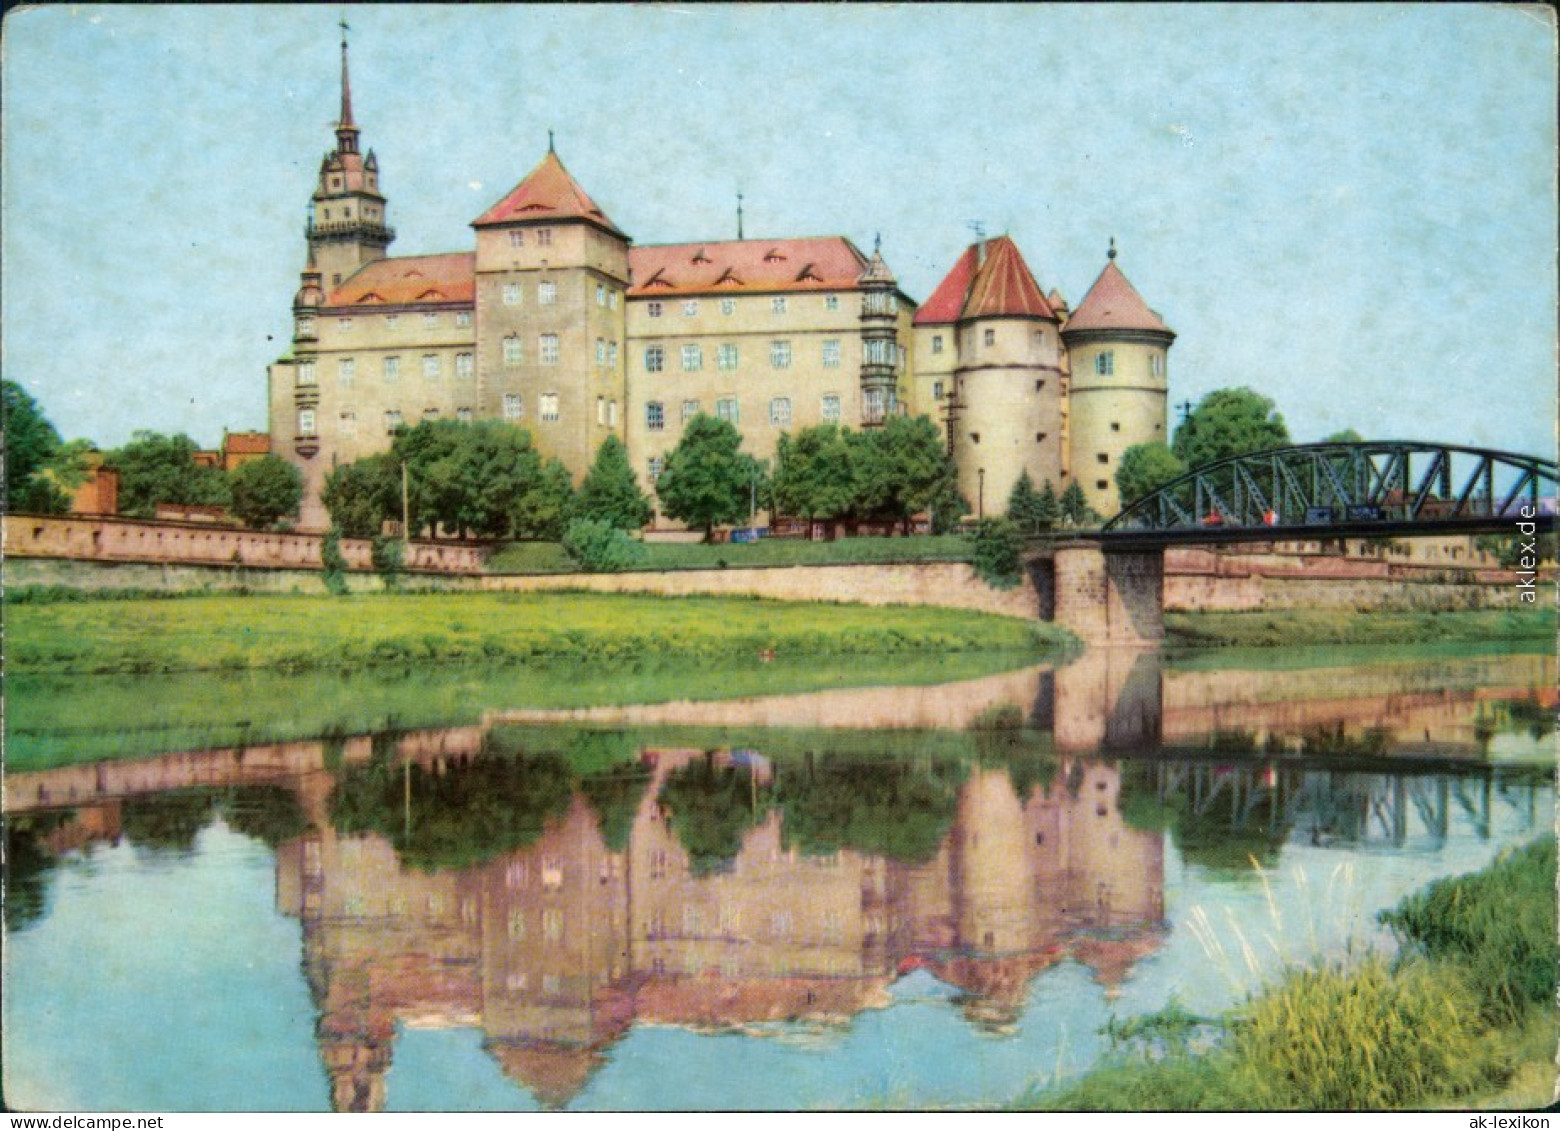 Ansichtskarte Torgau Schloss Hartenfels 1969 - Torgau